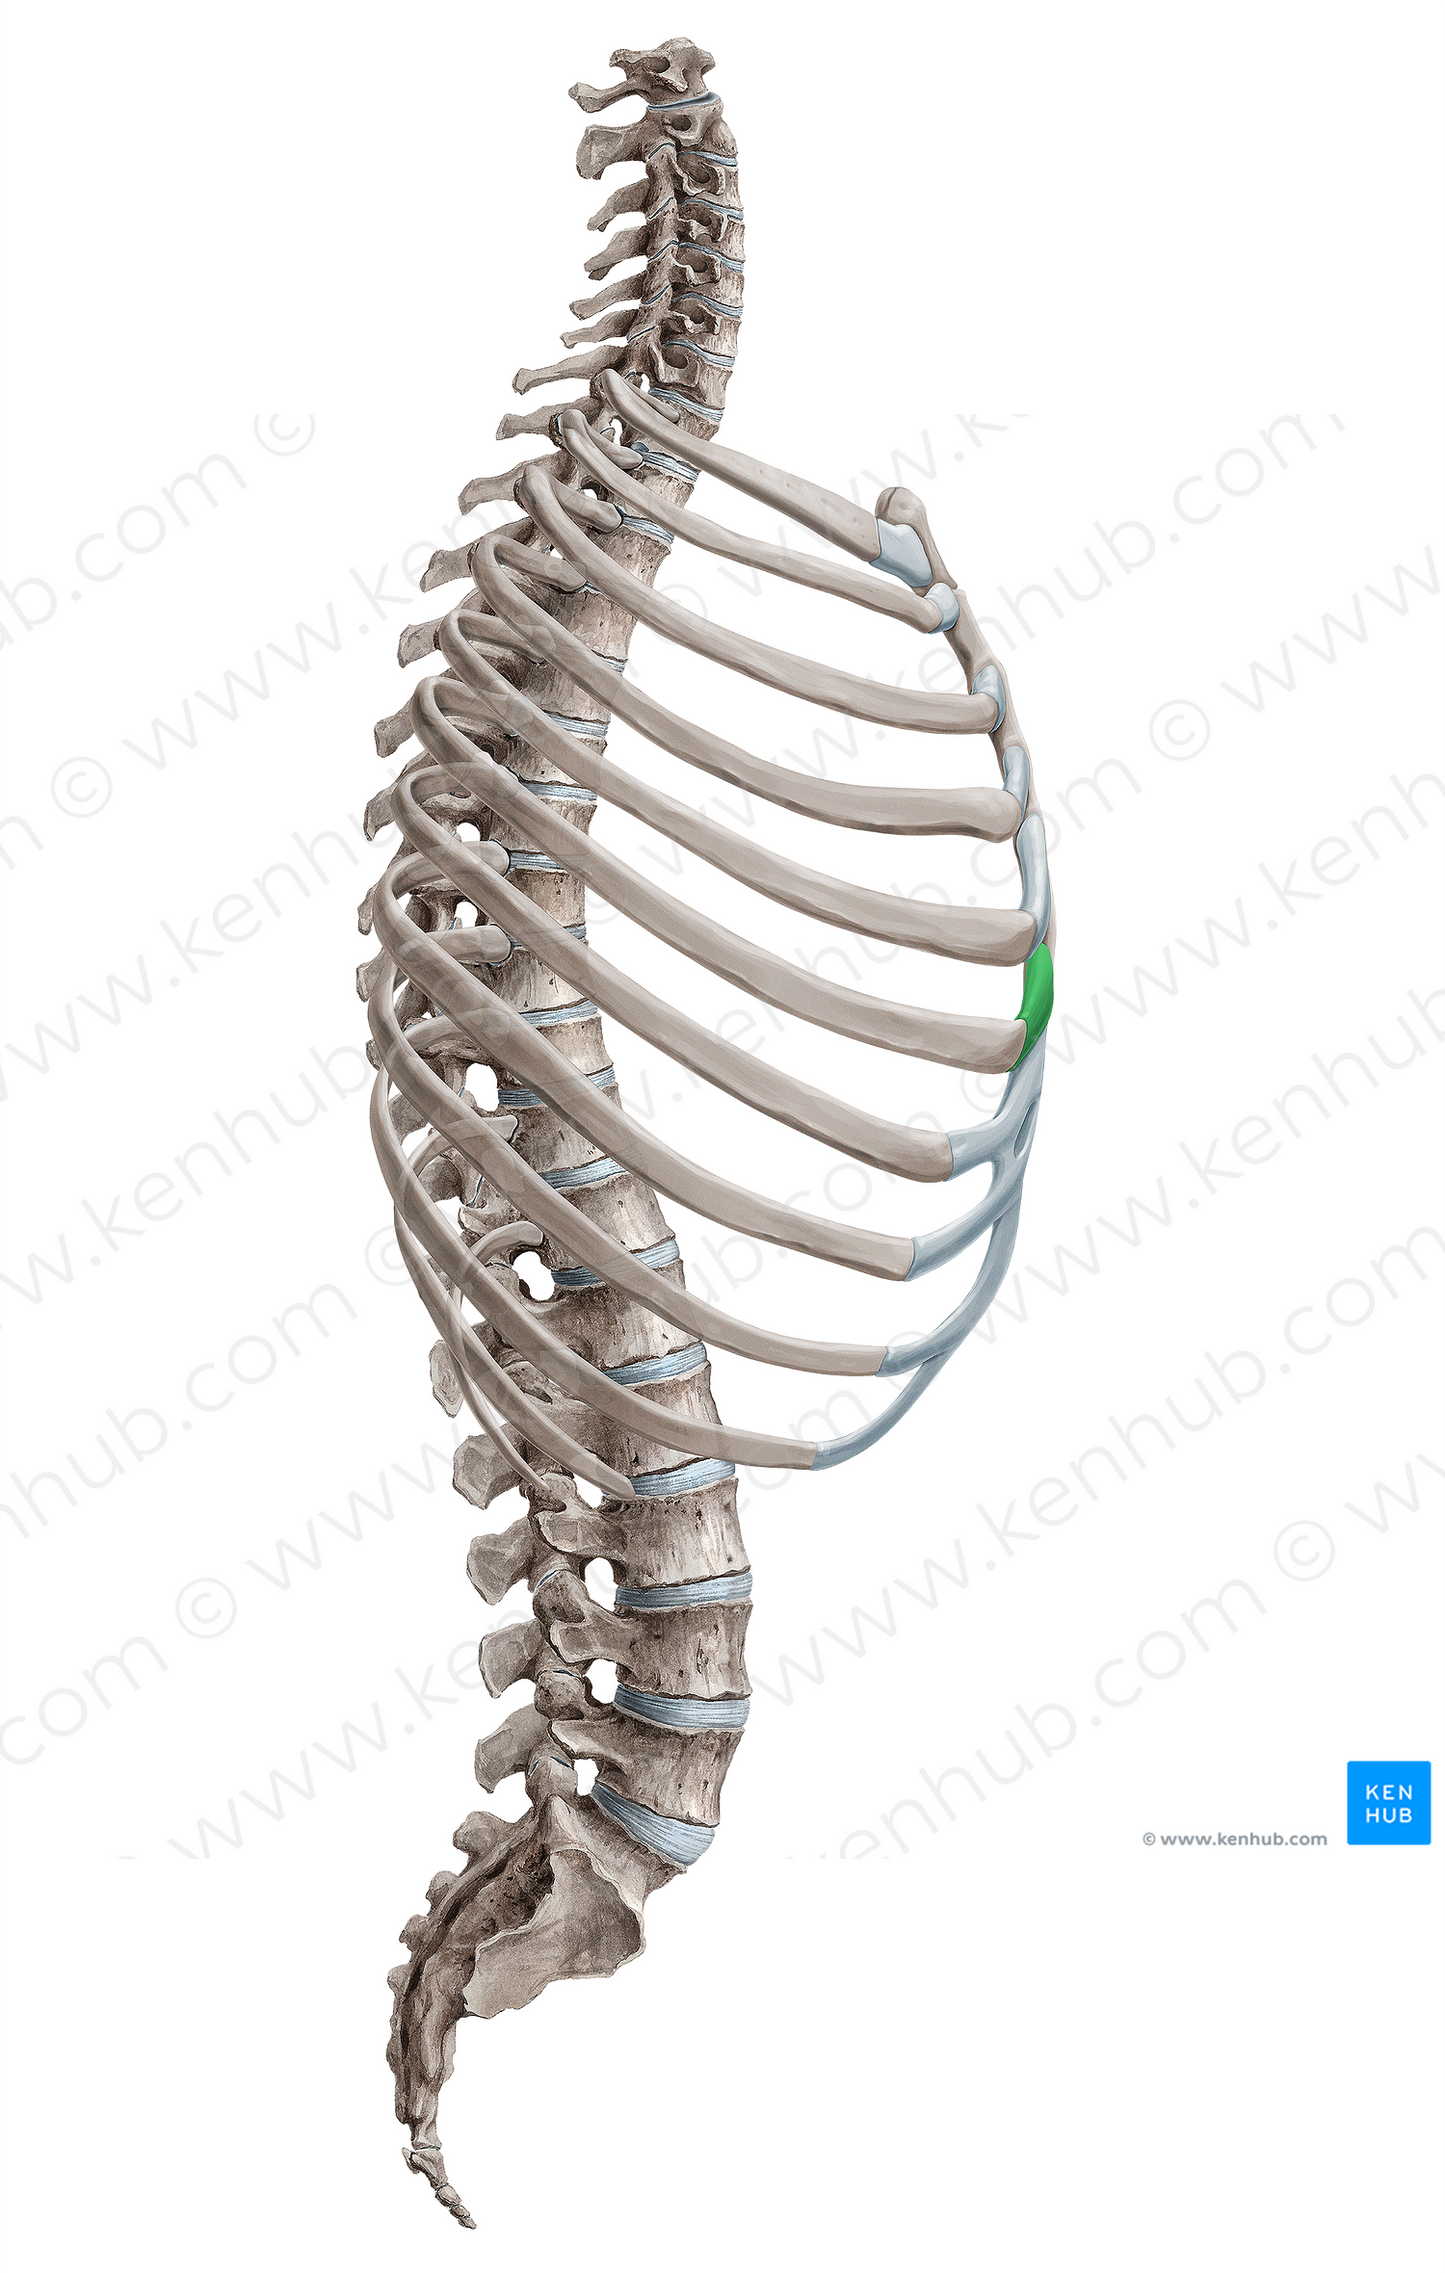 Costal cartilage of 6th rib (#18152)